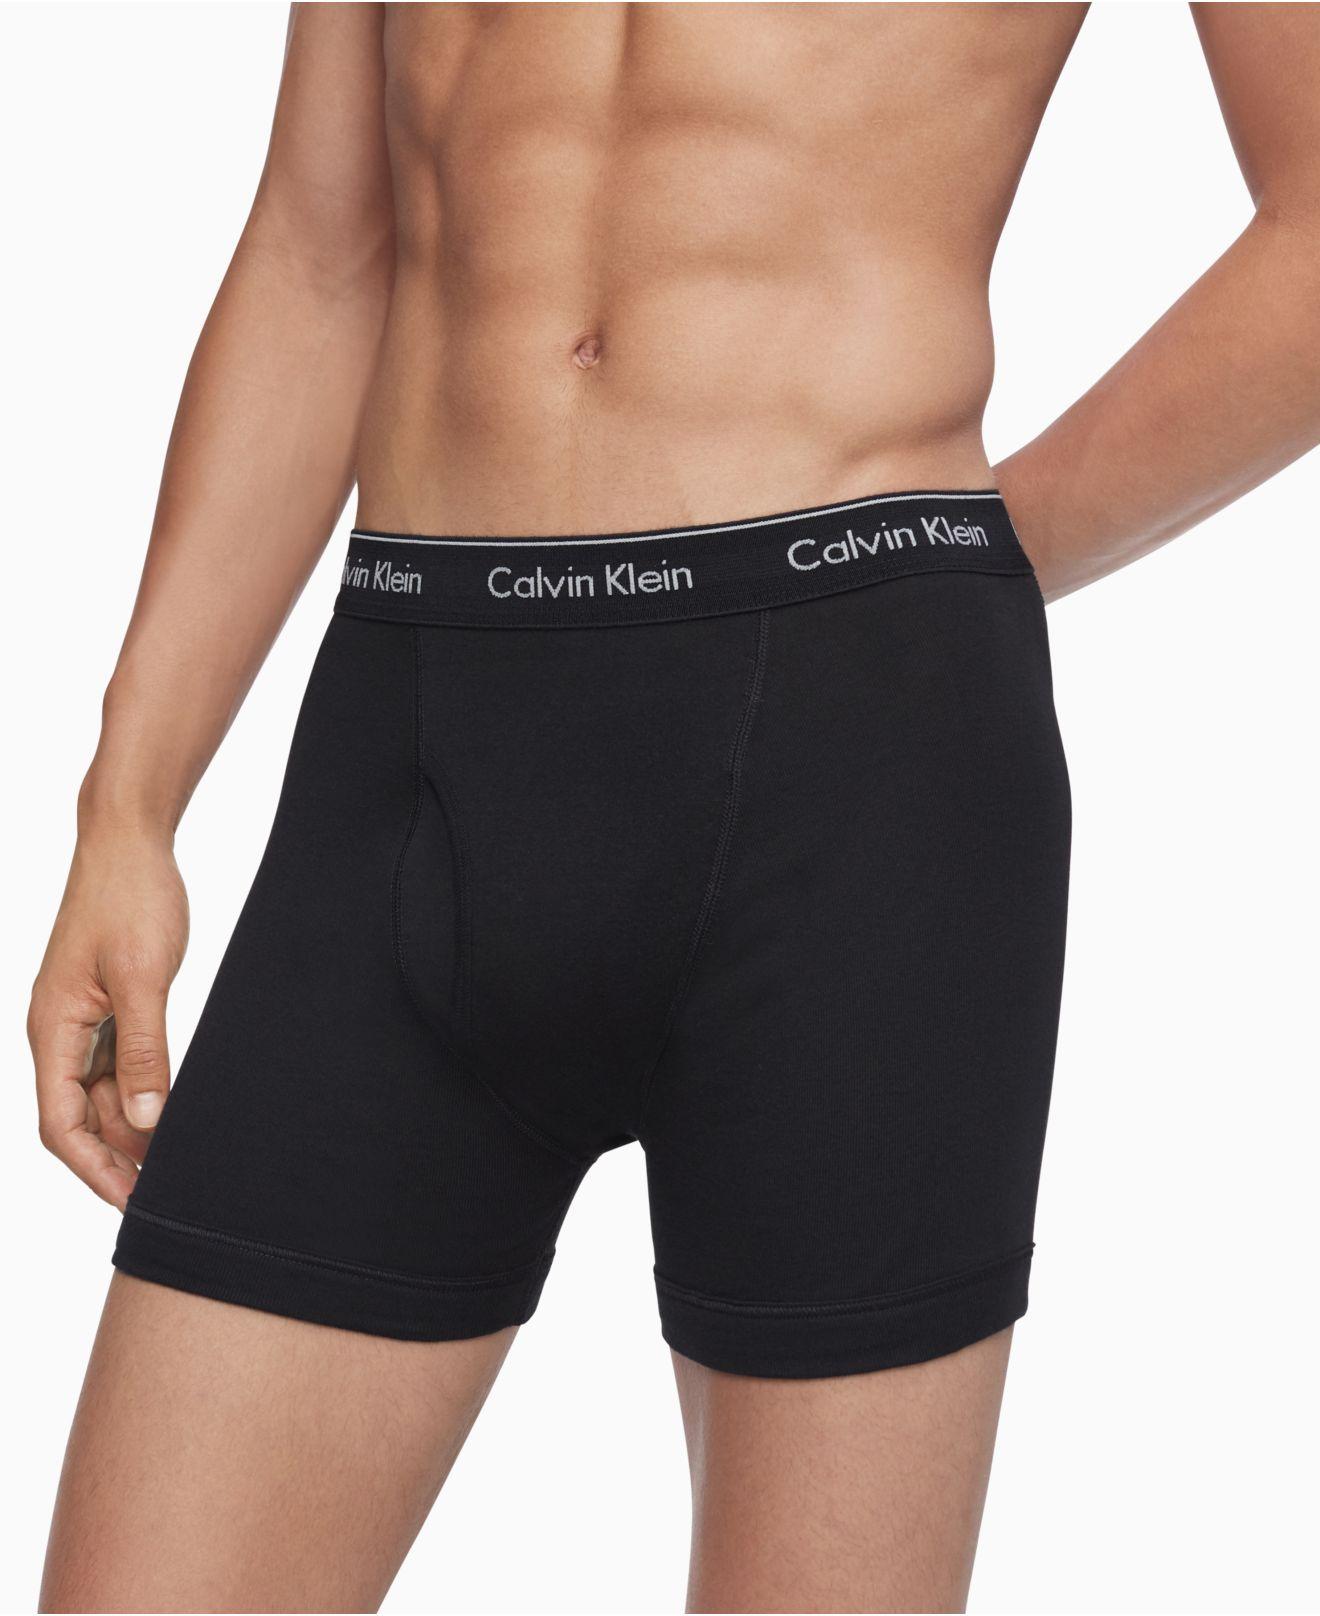 Calvin Klein 3-pack Cotton Classics Boxer Briefs in Black for Men - Lyst